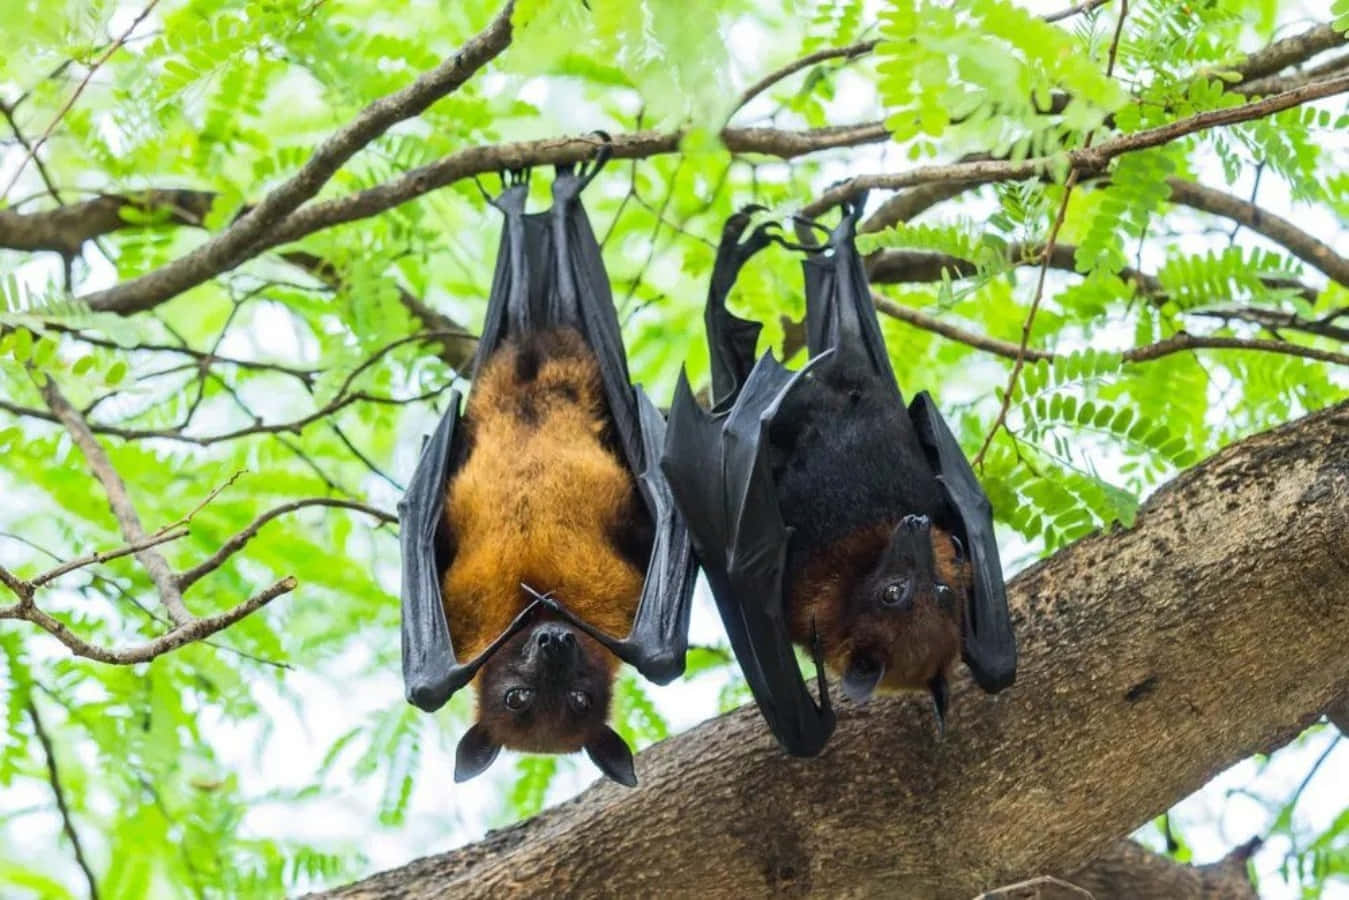 Fascinating Image Of Fruit Bats In Flight